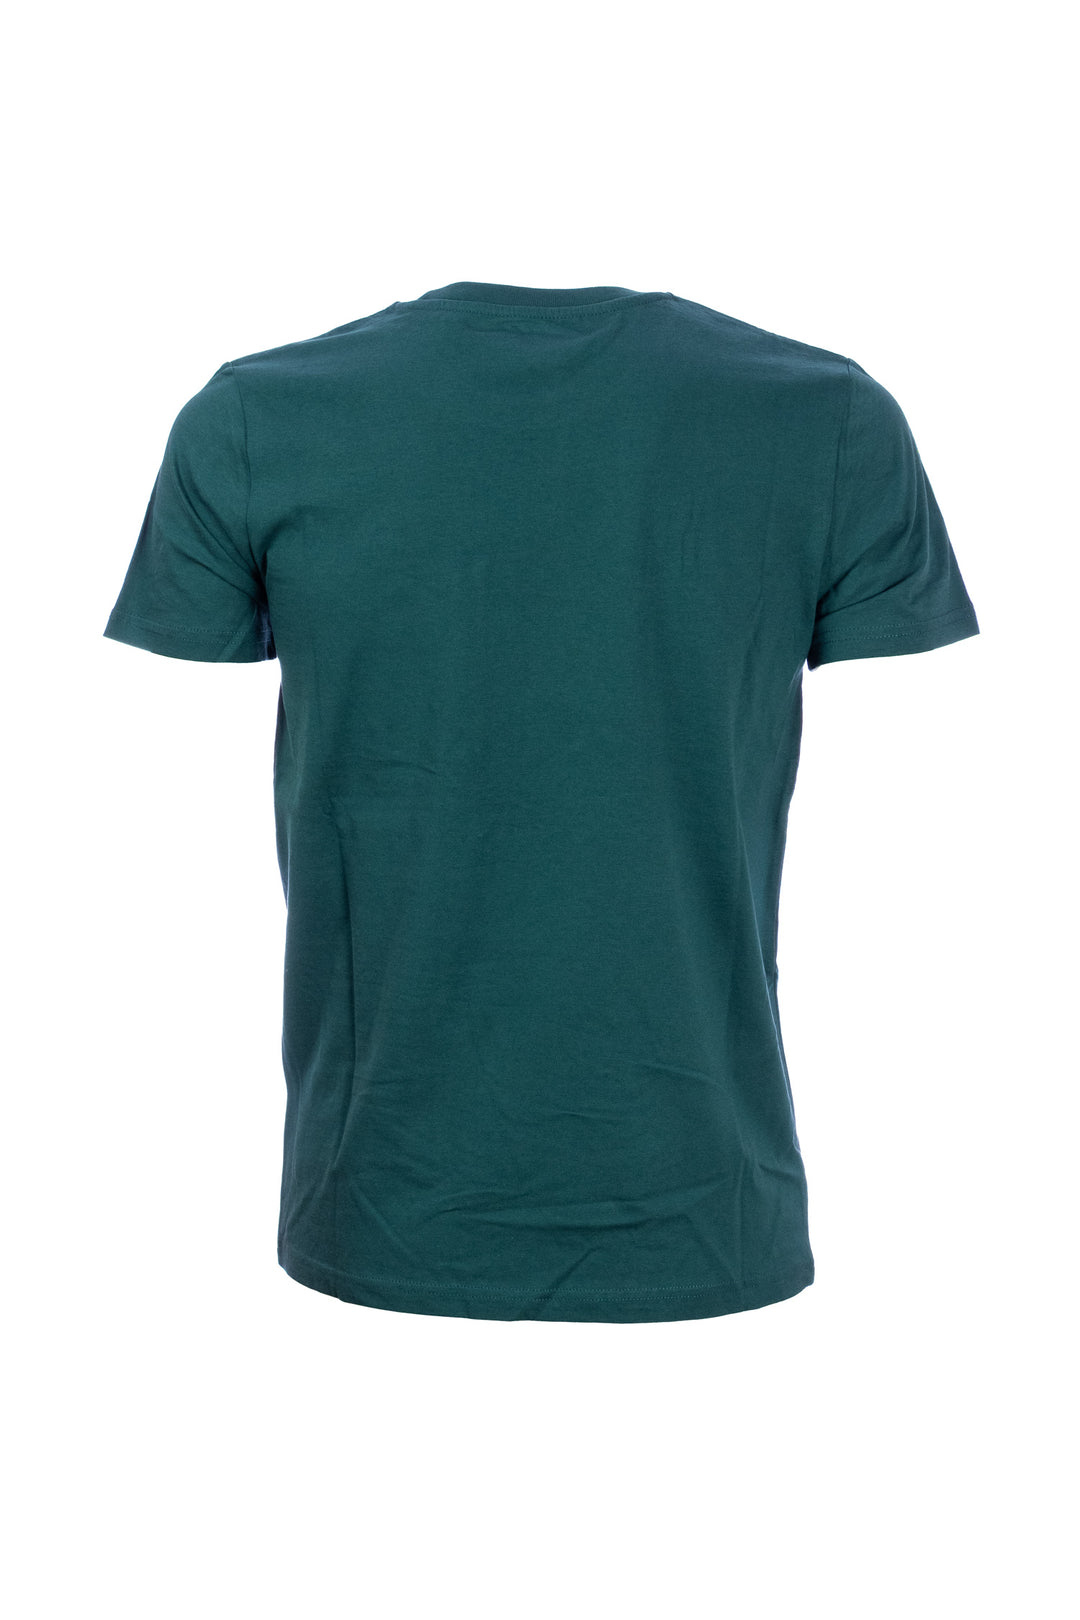 Mancinelli 1954 T-shirt verde scuro tinta unita in cotone - Mancinelli 1954